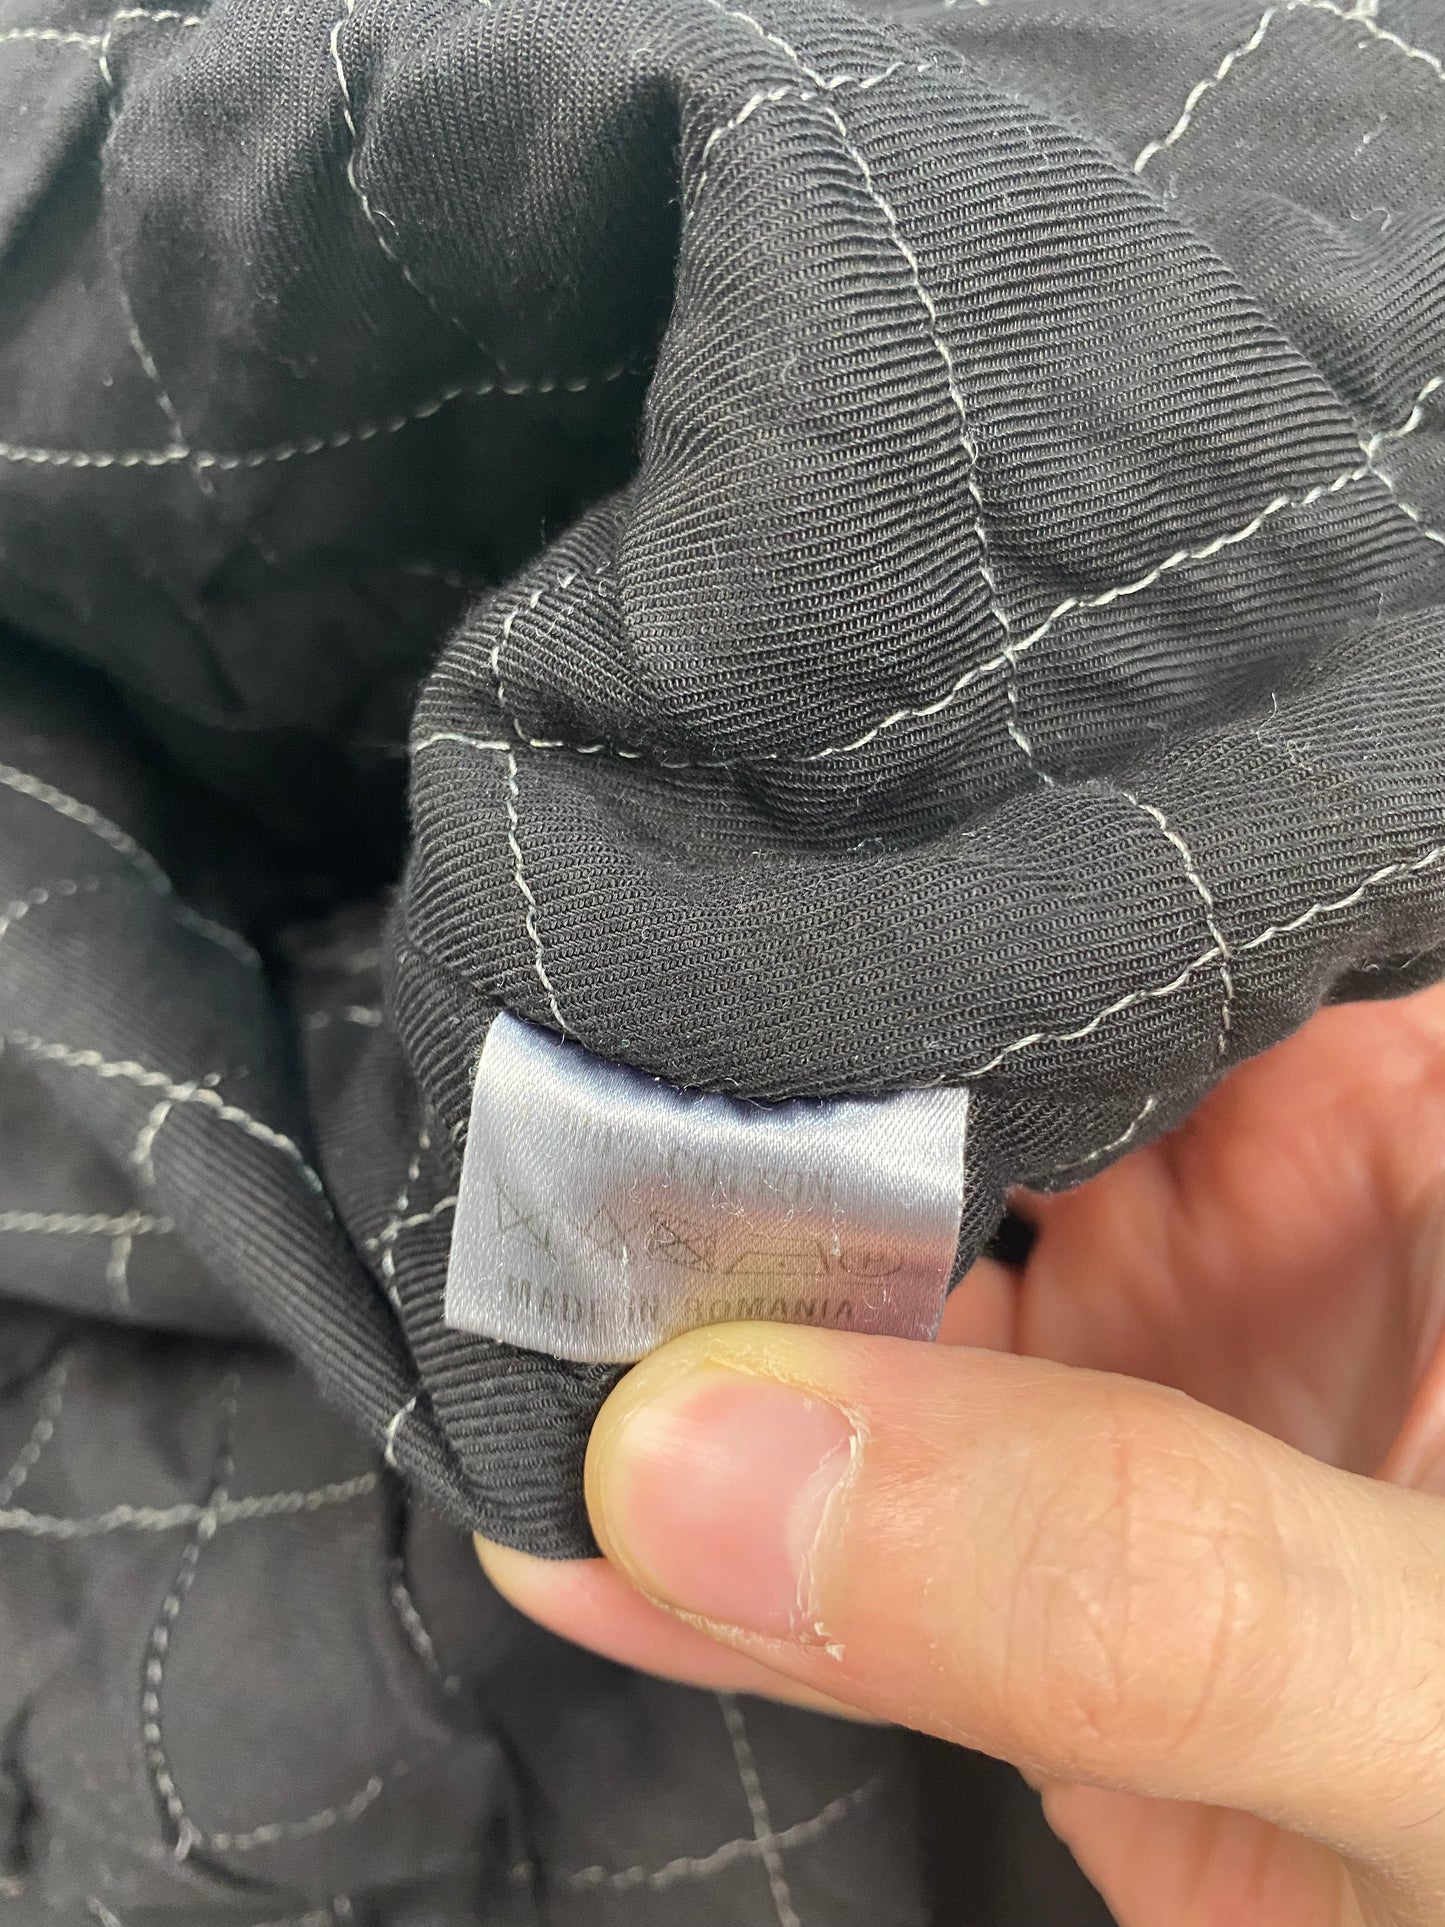 Dries Van Noten AW14 moleskin (100%cotton) backzip bomber jacket SZ:L